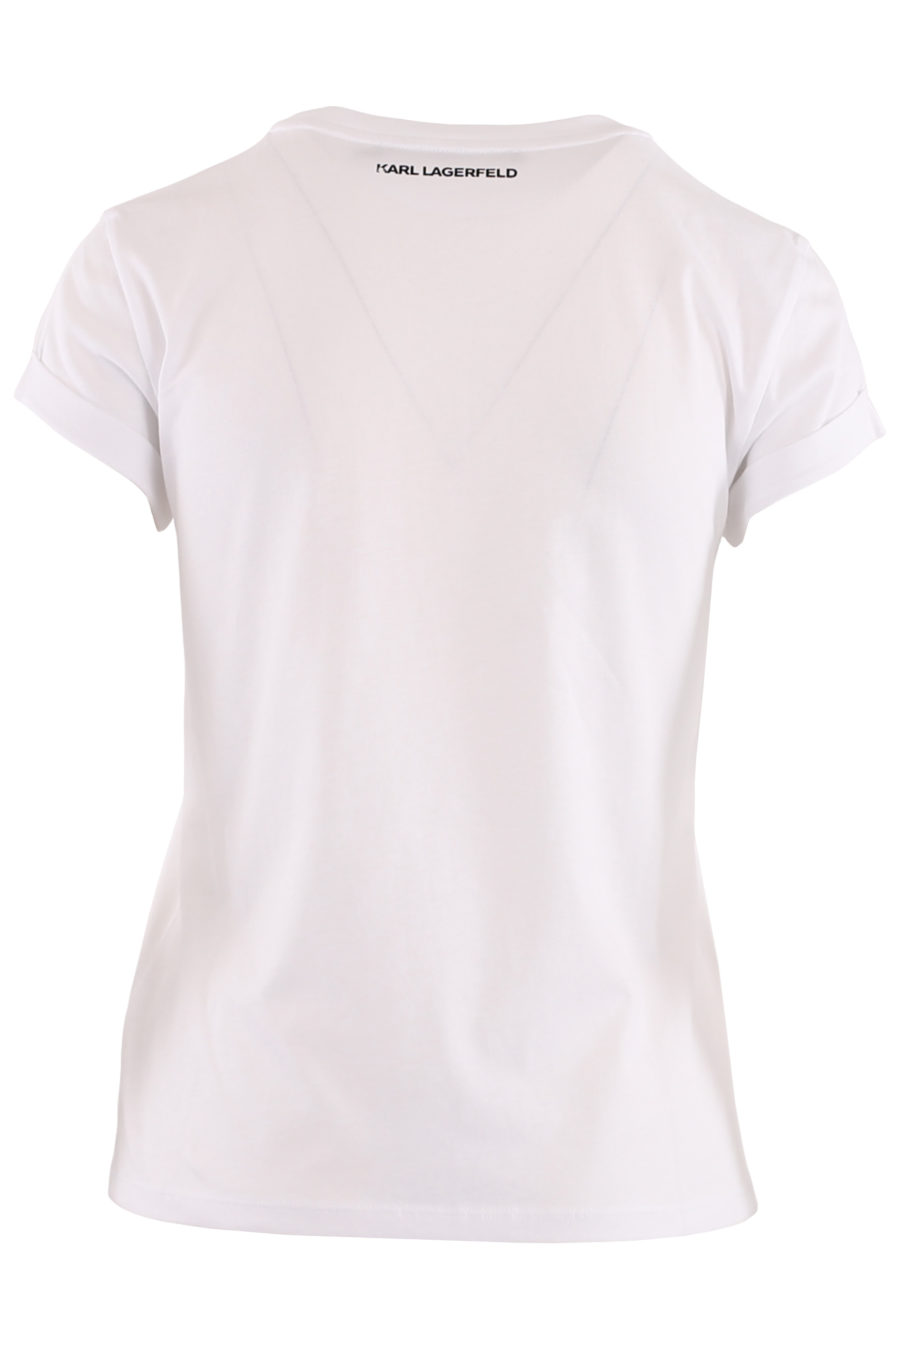 White T-shirt with pocket and logo - b23fe41385d4ae7ad58c85f6b5ad4943bc283560